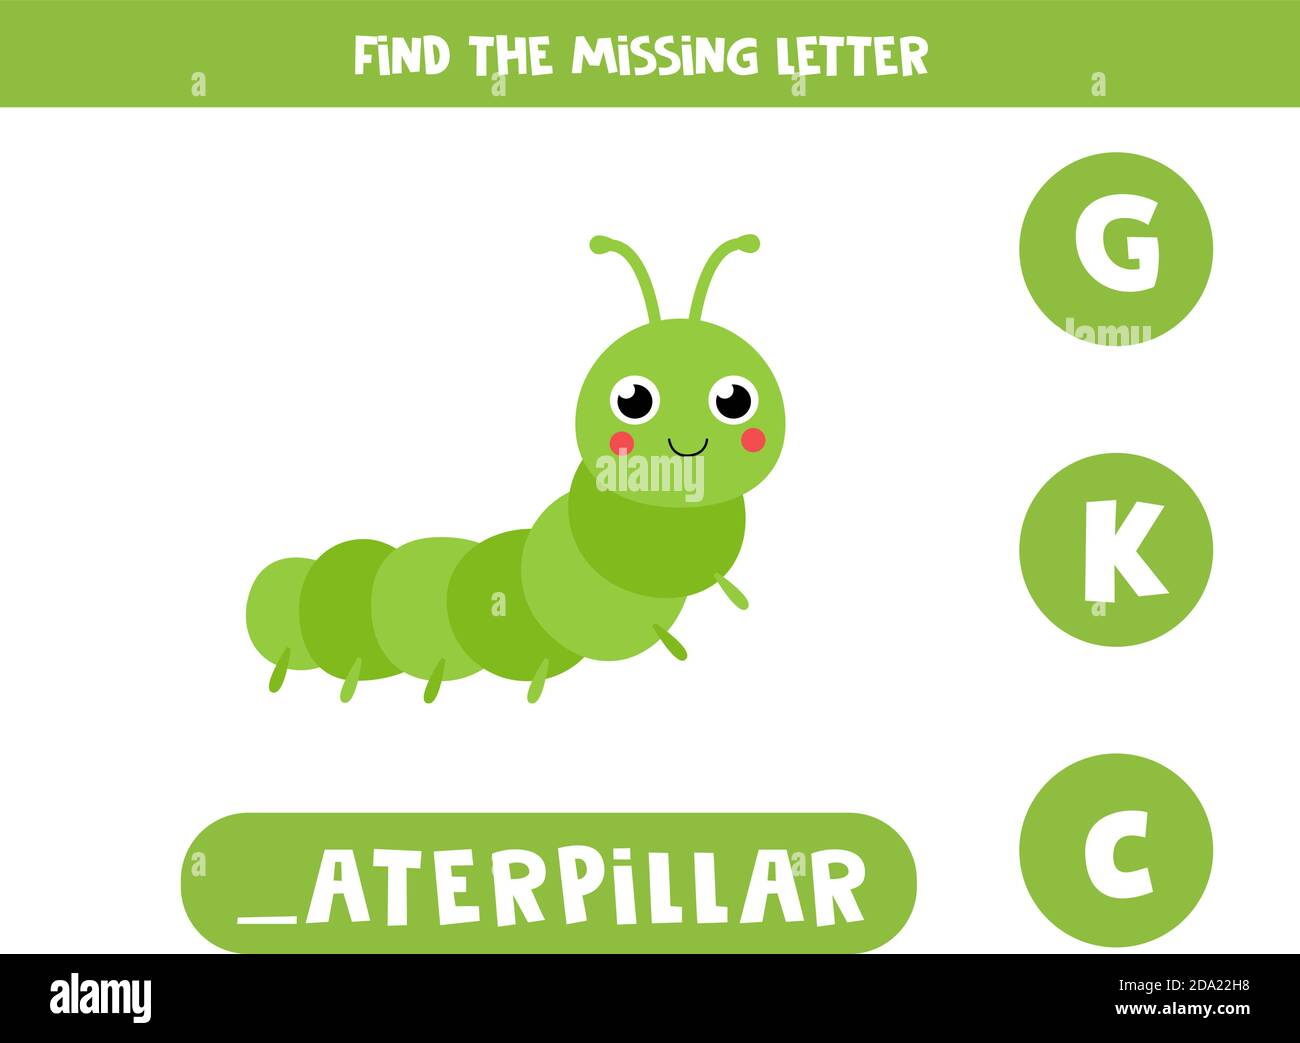 Find missing letter. Carton caterpillar illustration. Logical game. Stock Vector